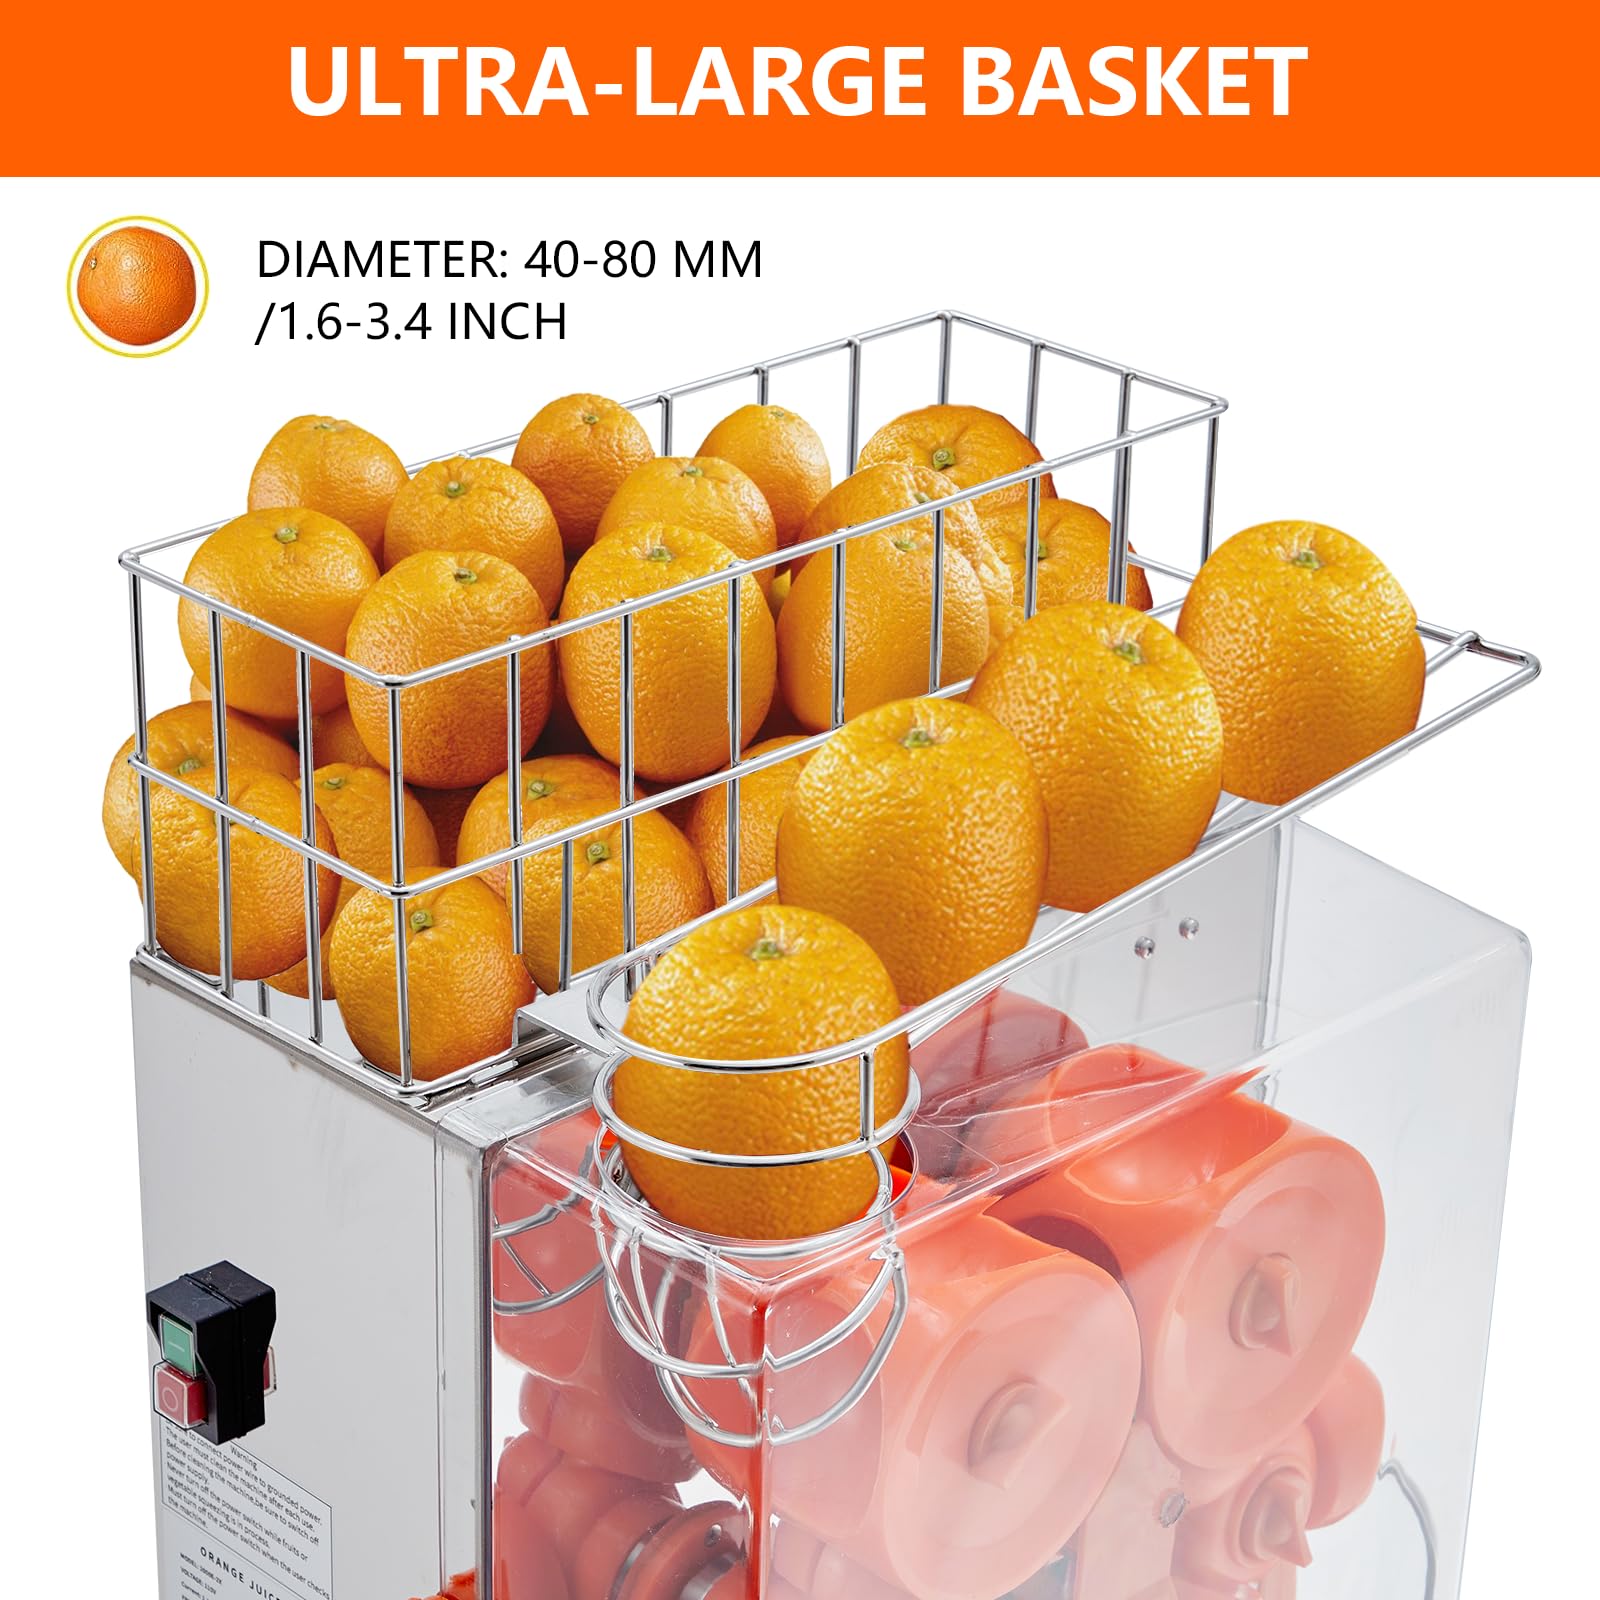 120W Commercial Orange Juicer, 110V Electric Semi-Automatic - GARVEE